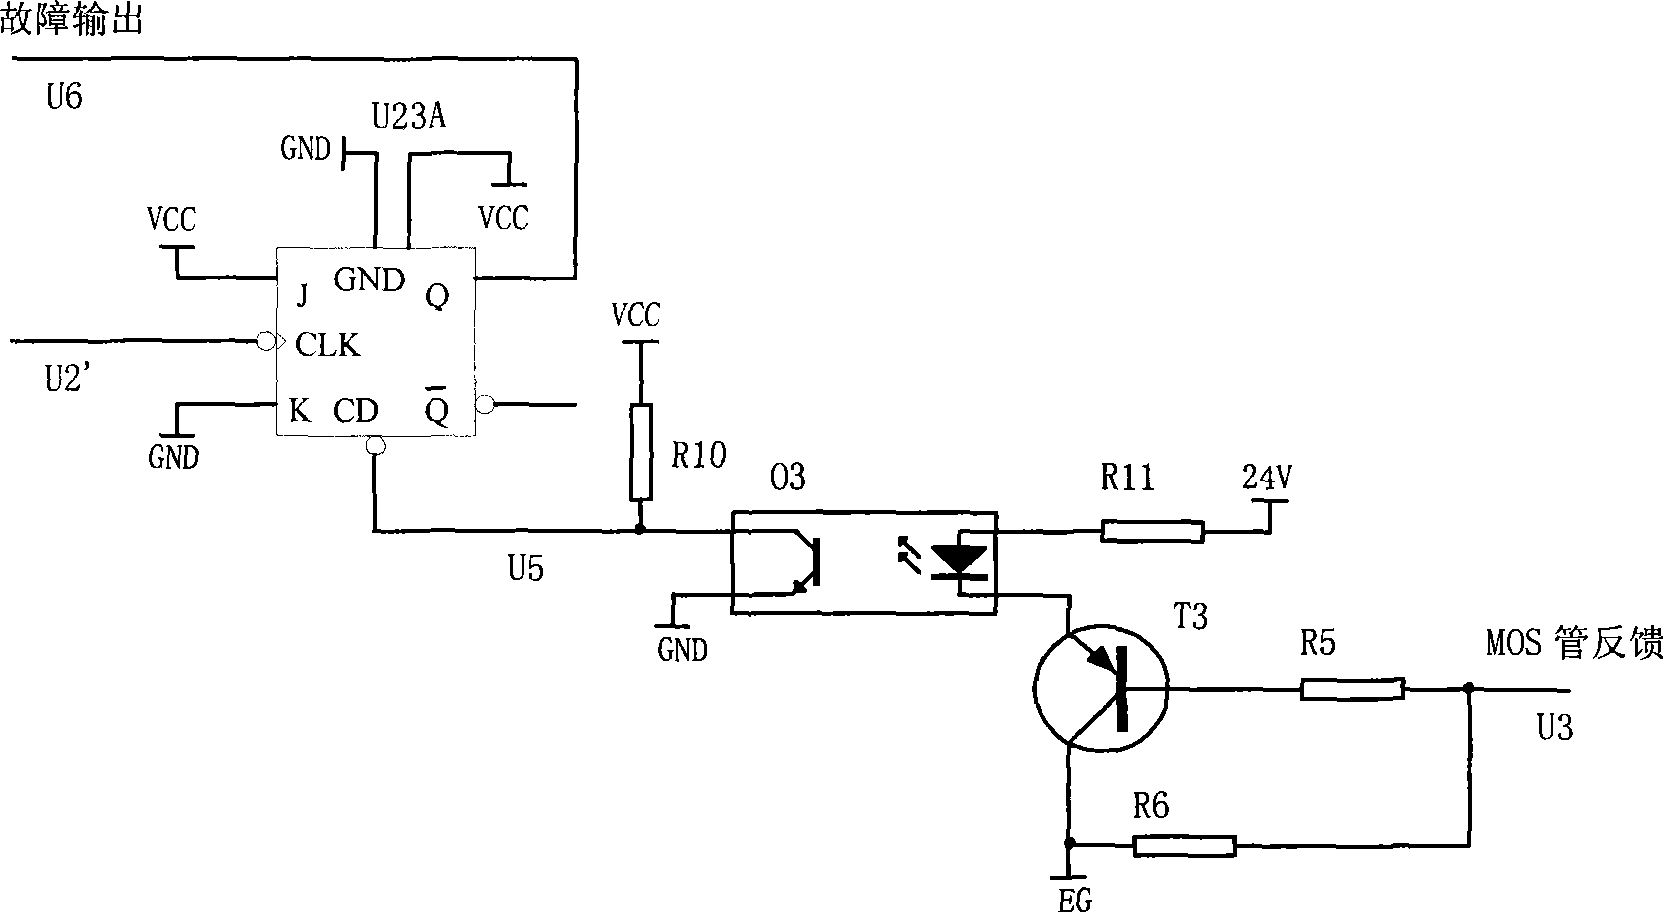 Isolation type power driving circuit